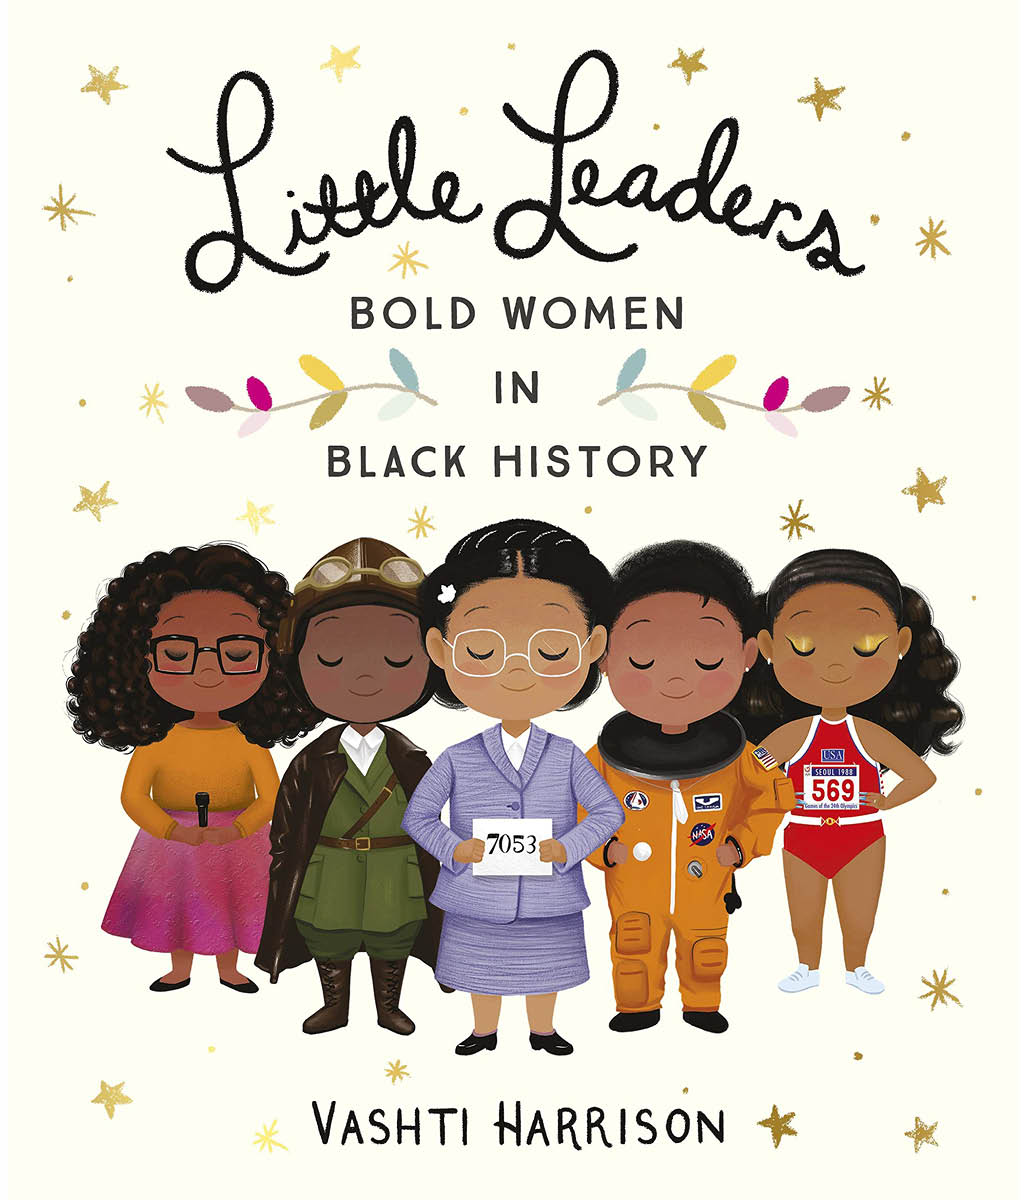 Little Leaders: Bold Women in Black History Vashti Harrison